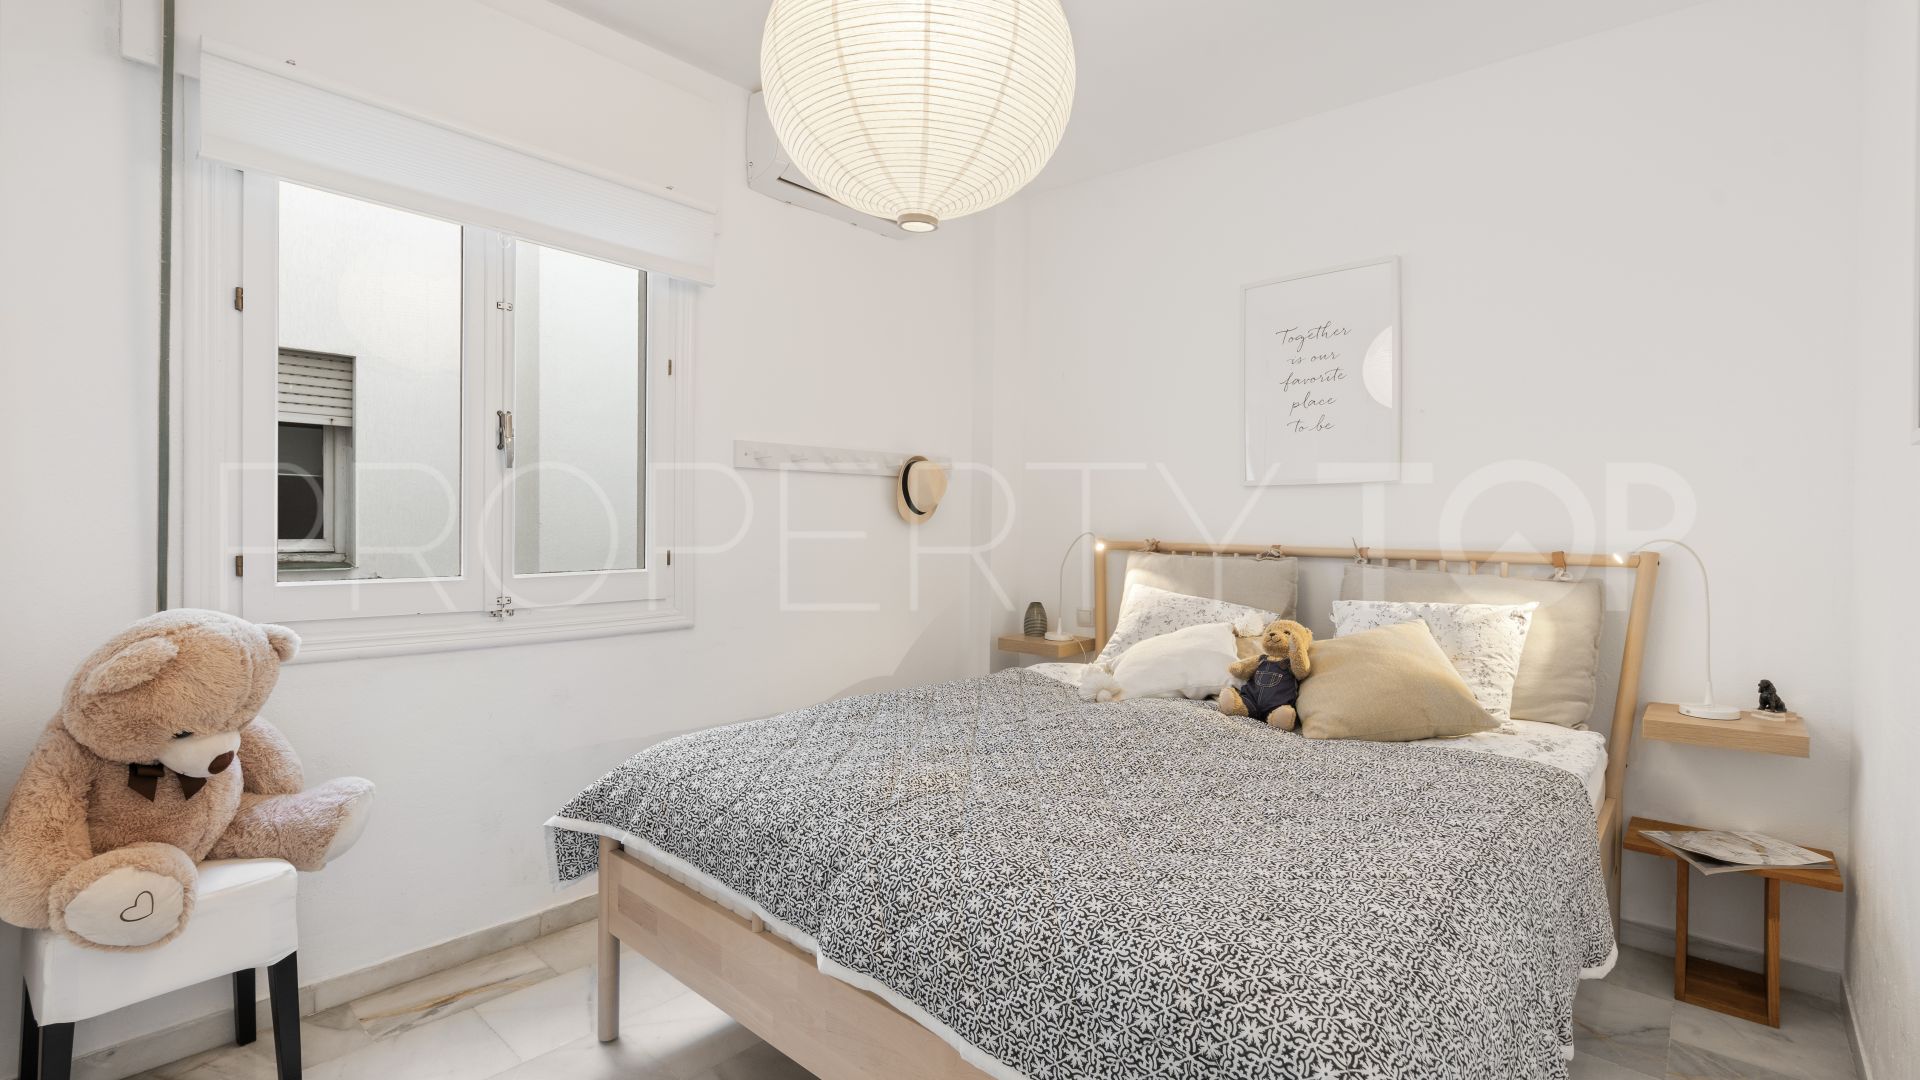 5 bedrooms apartment in Fuengirola for sale